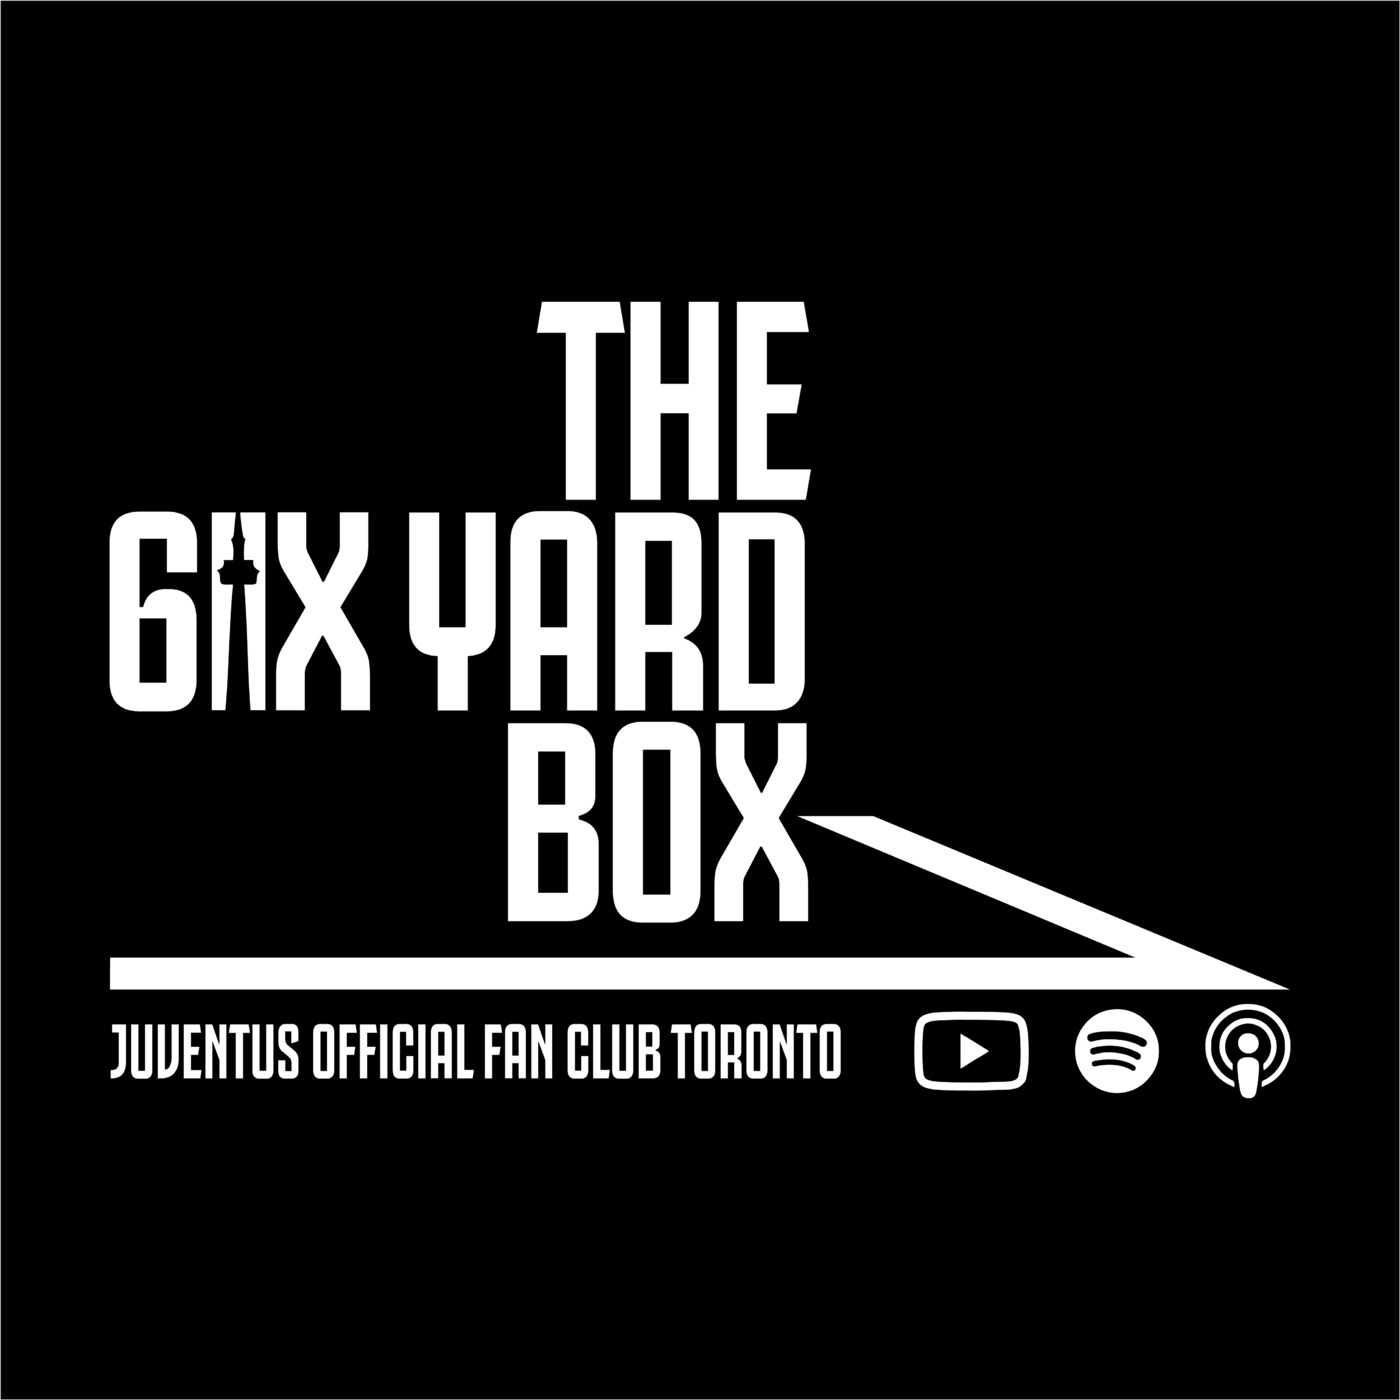 Episode 12: The 6ix Yard Box Podcast Ep. 12 ft. Südkurve Toronto- Juventus, Bayern Munich, UCL, Euro Cup + More